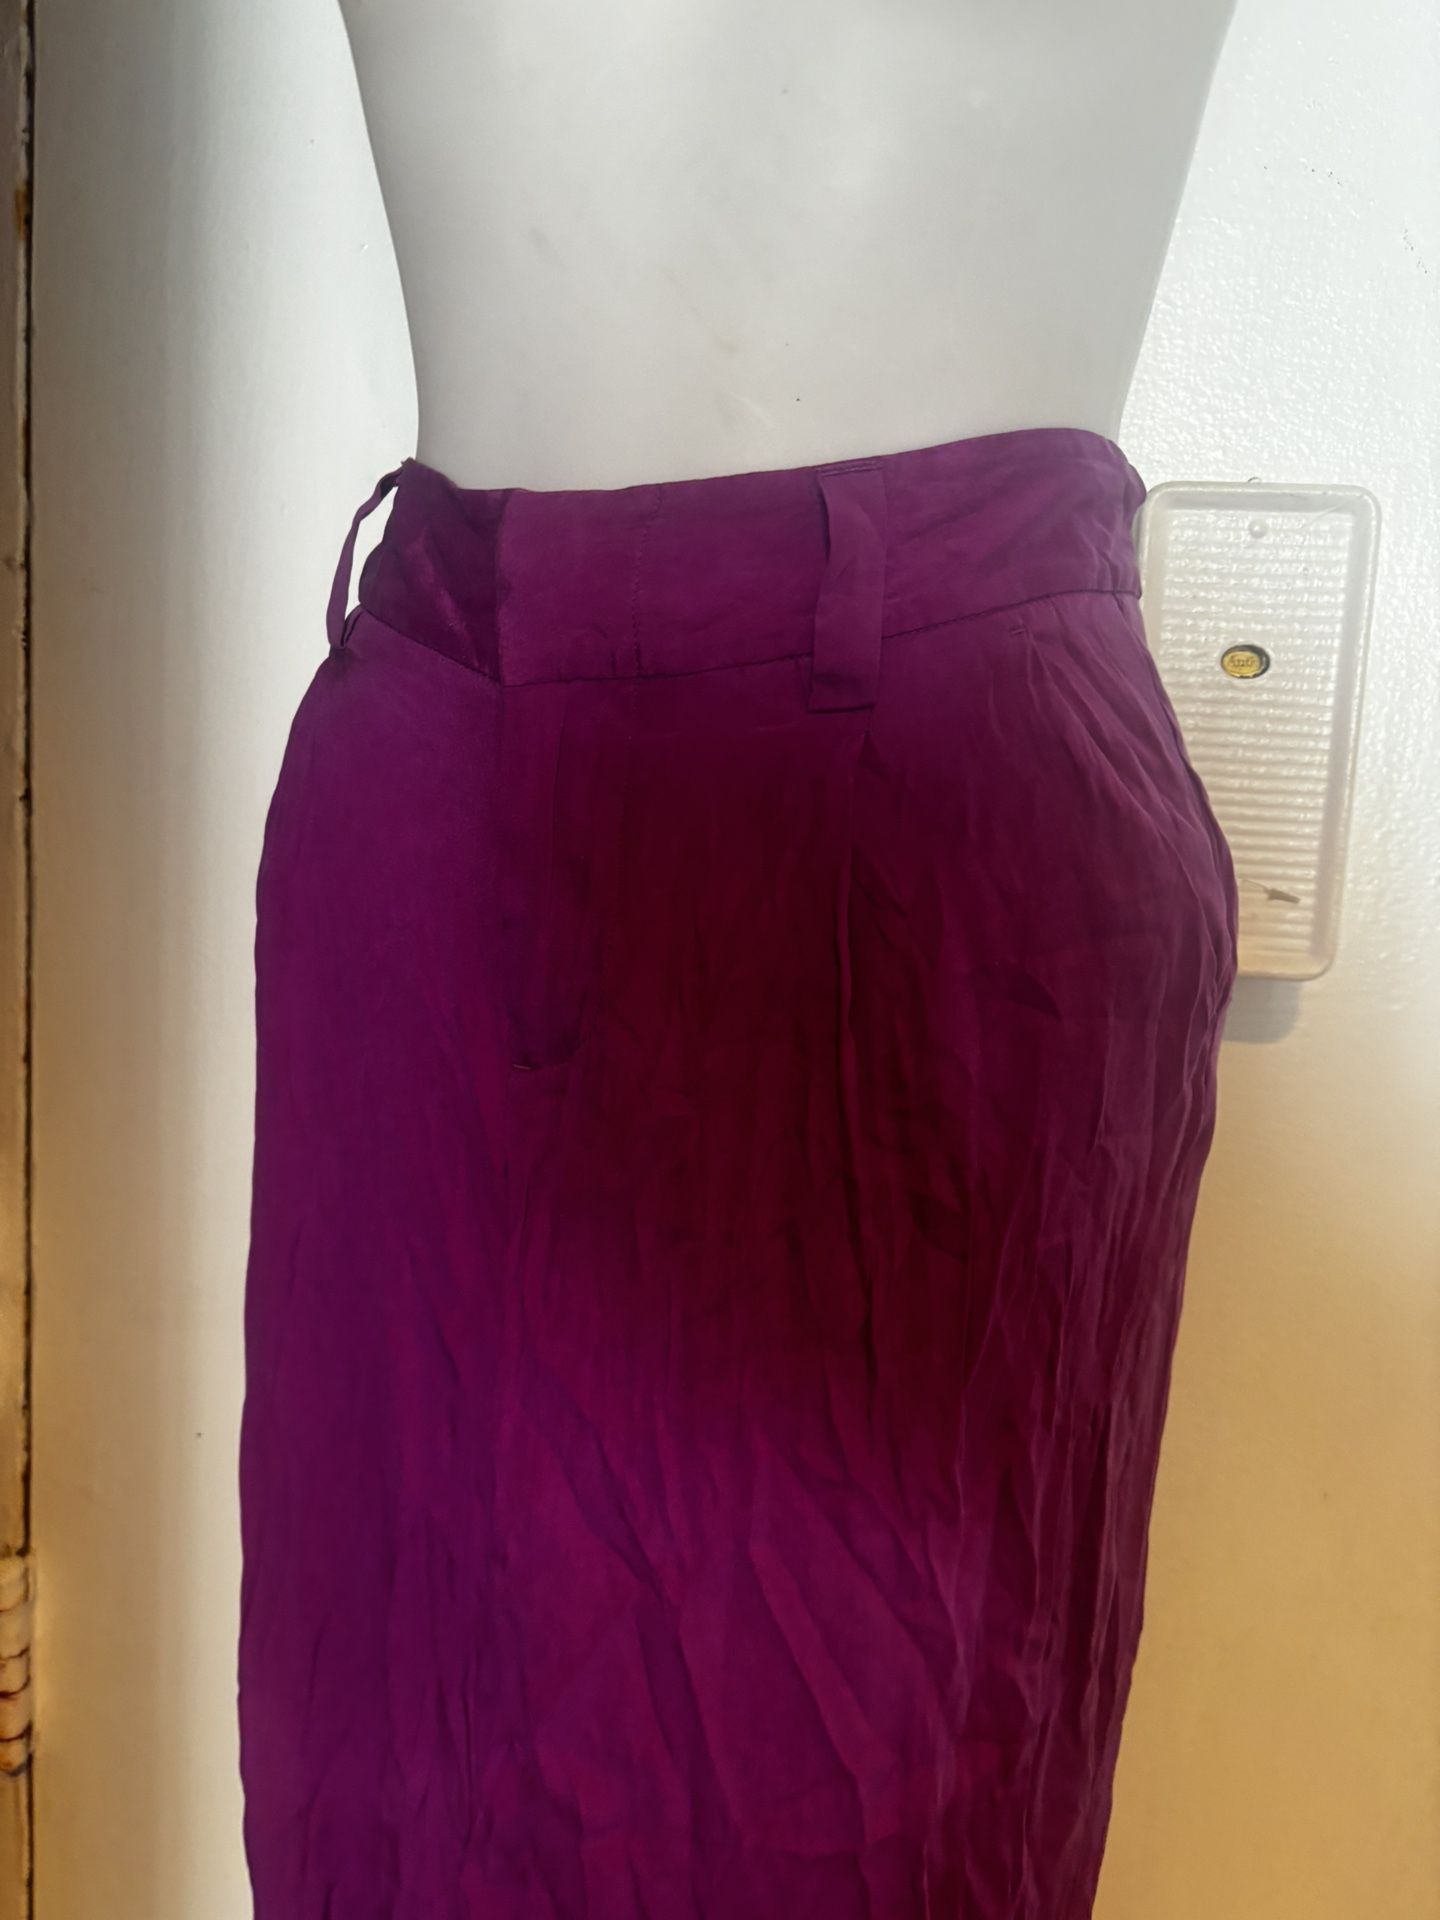 ALICE + OLIVIA dress pants y2k trousers bright purple cuffed bottoms rare 